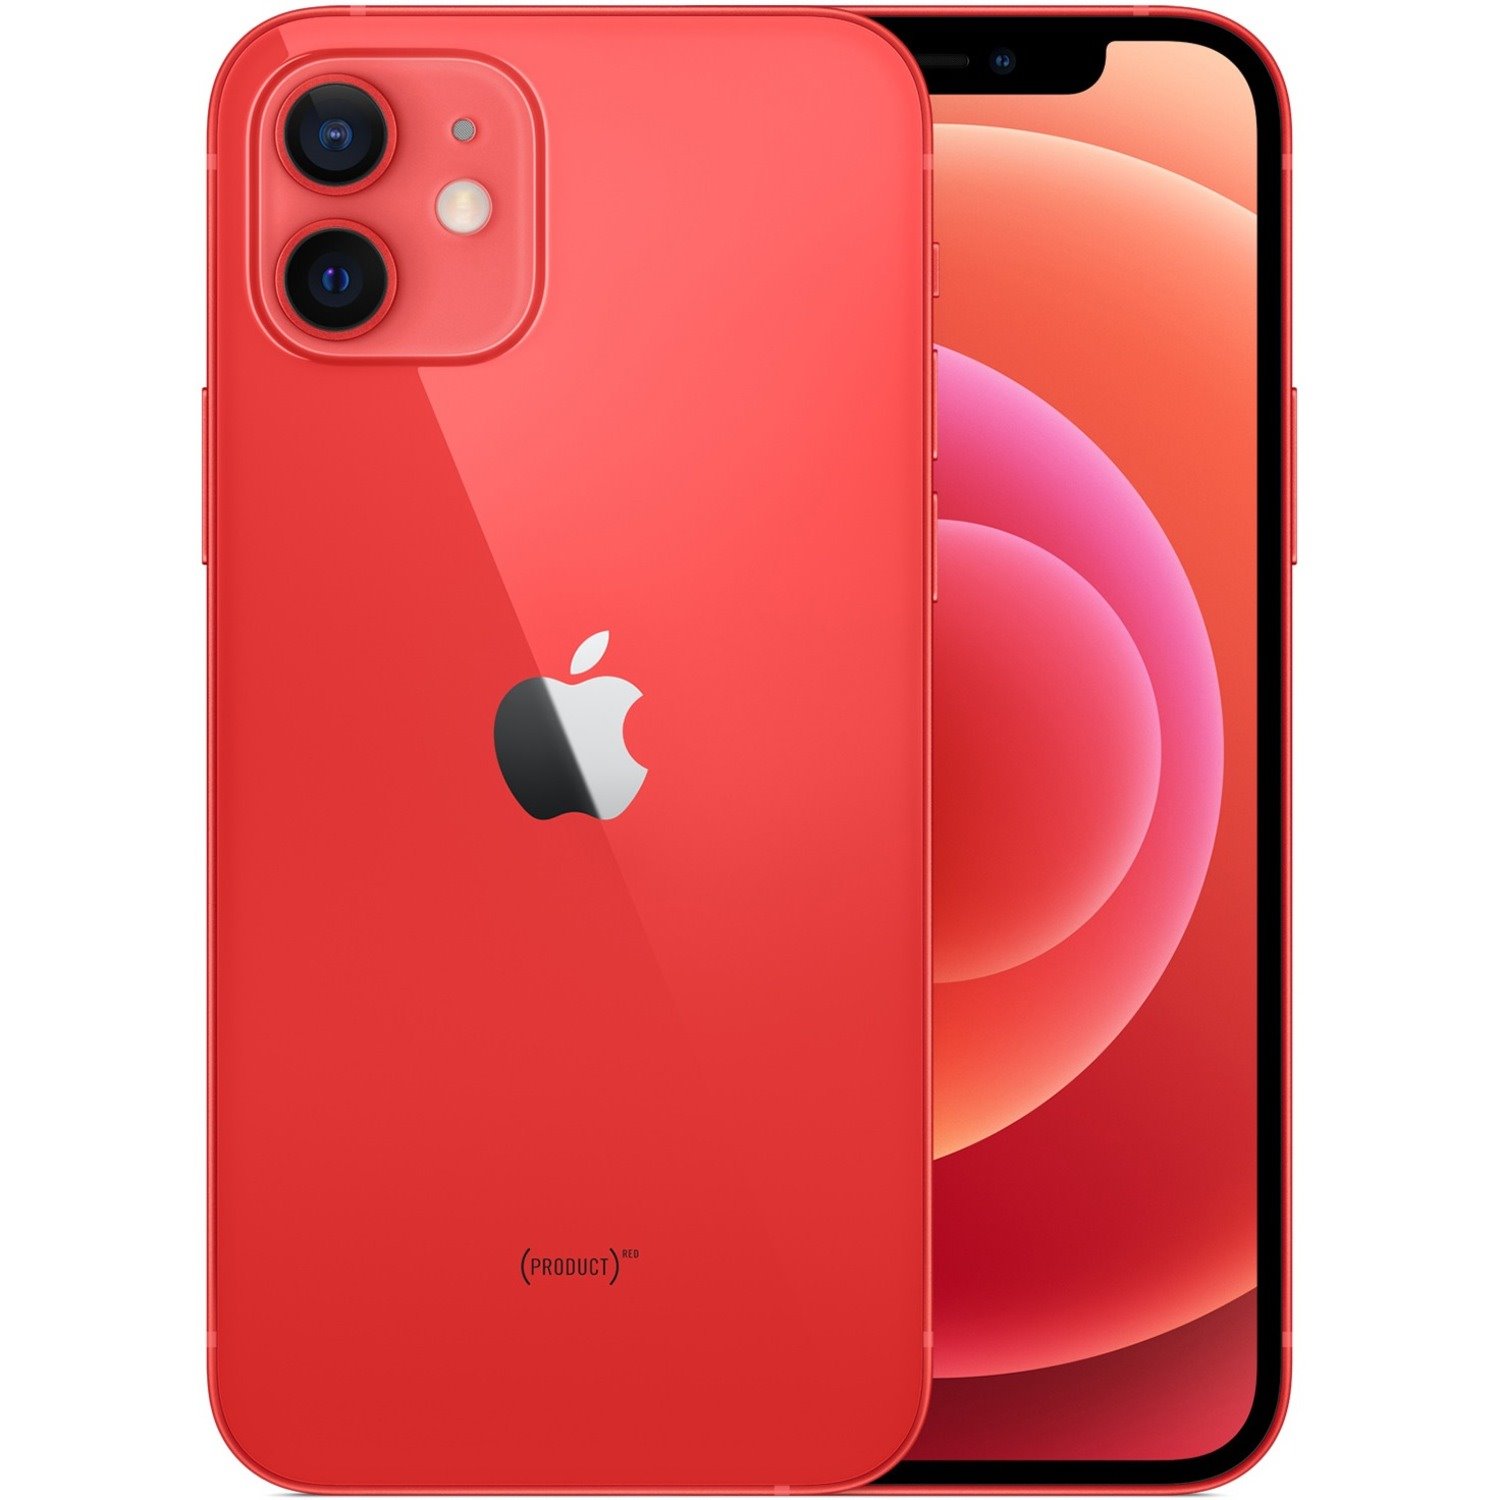 Apple iPhone 12 mini 256 GB Smartphone - 13.7 cm (5.4") OLED Full HD Plus 2340 x 1080 - Hexa-core (6 Core) - iOS 14 - 5G - Red